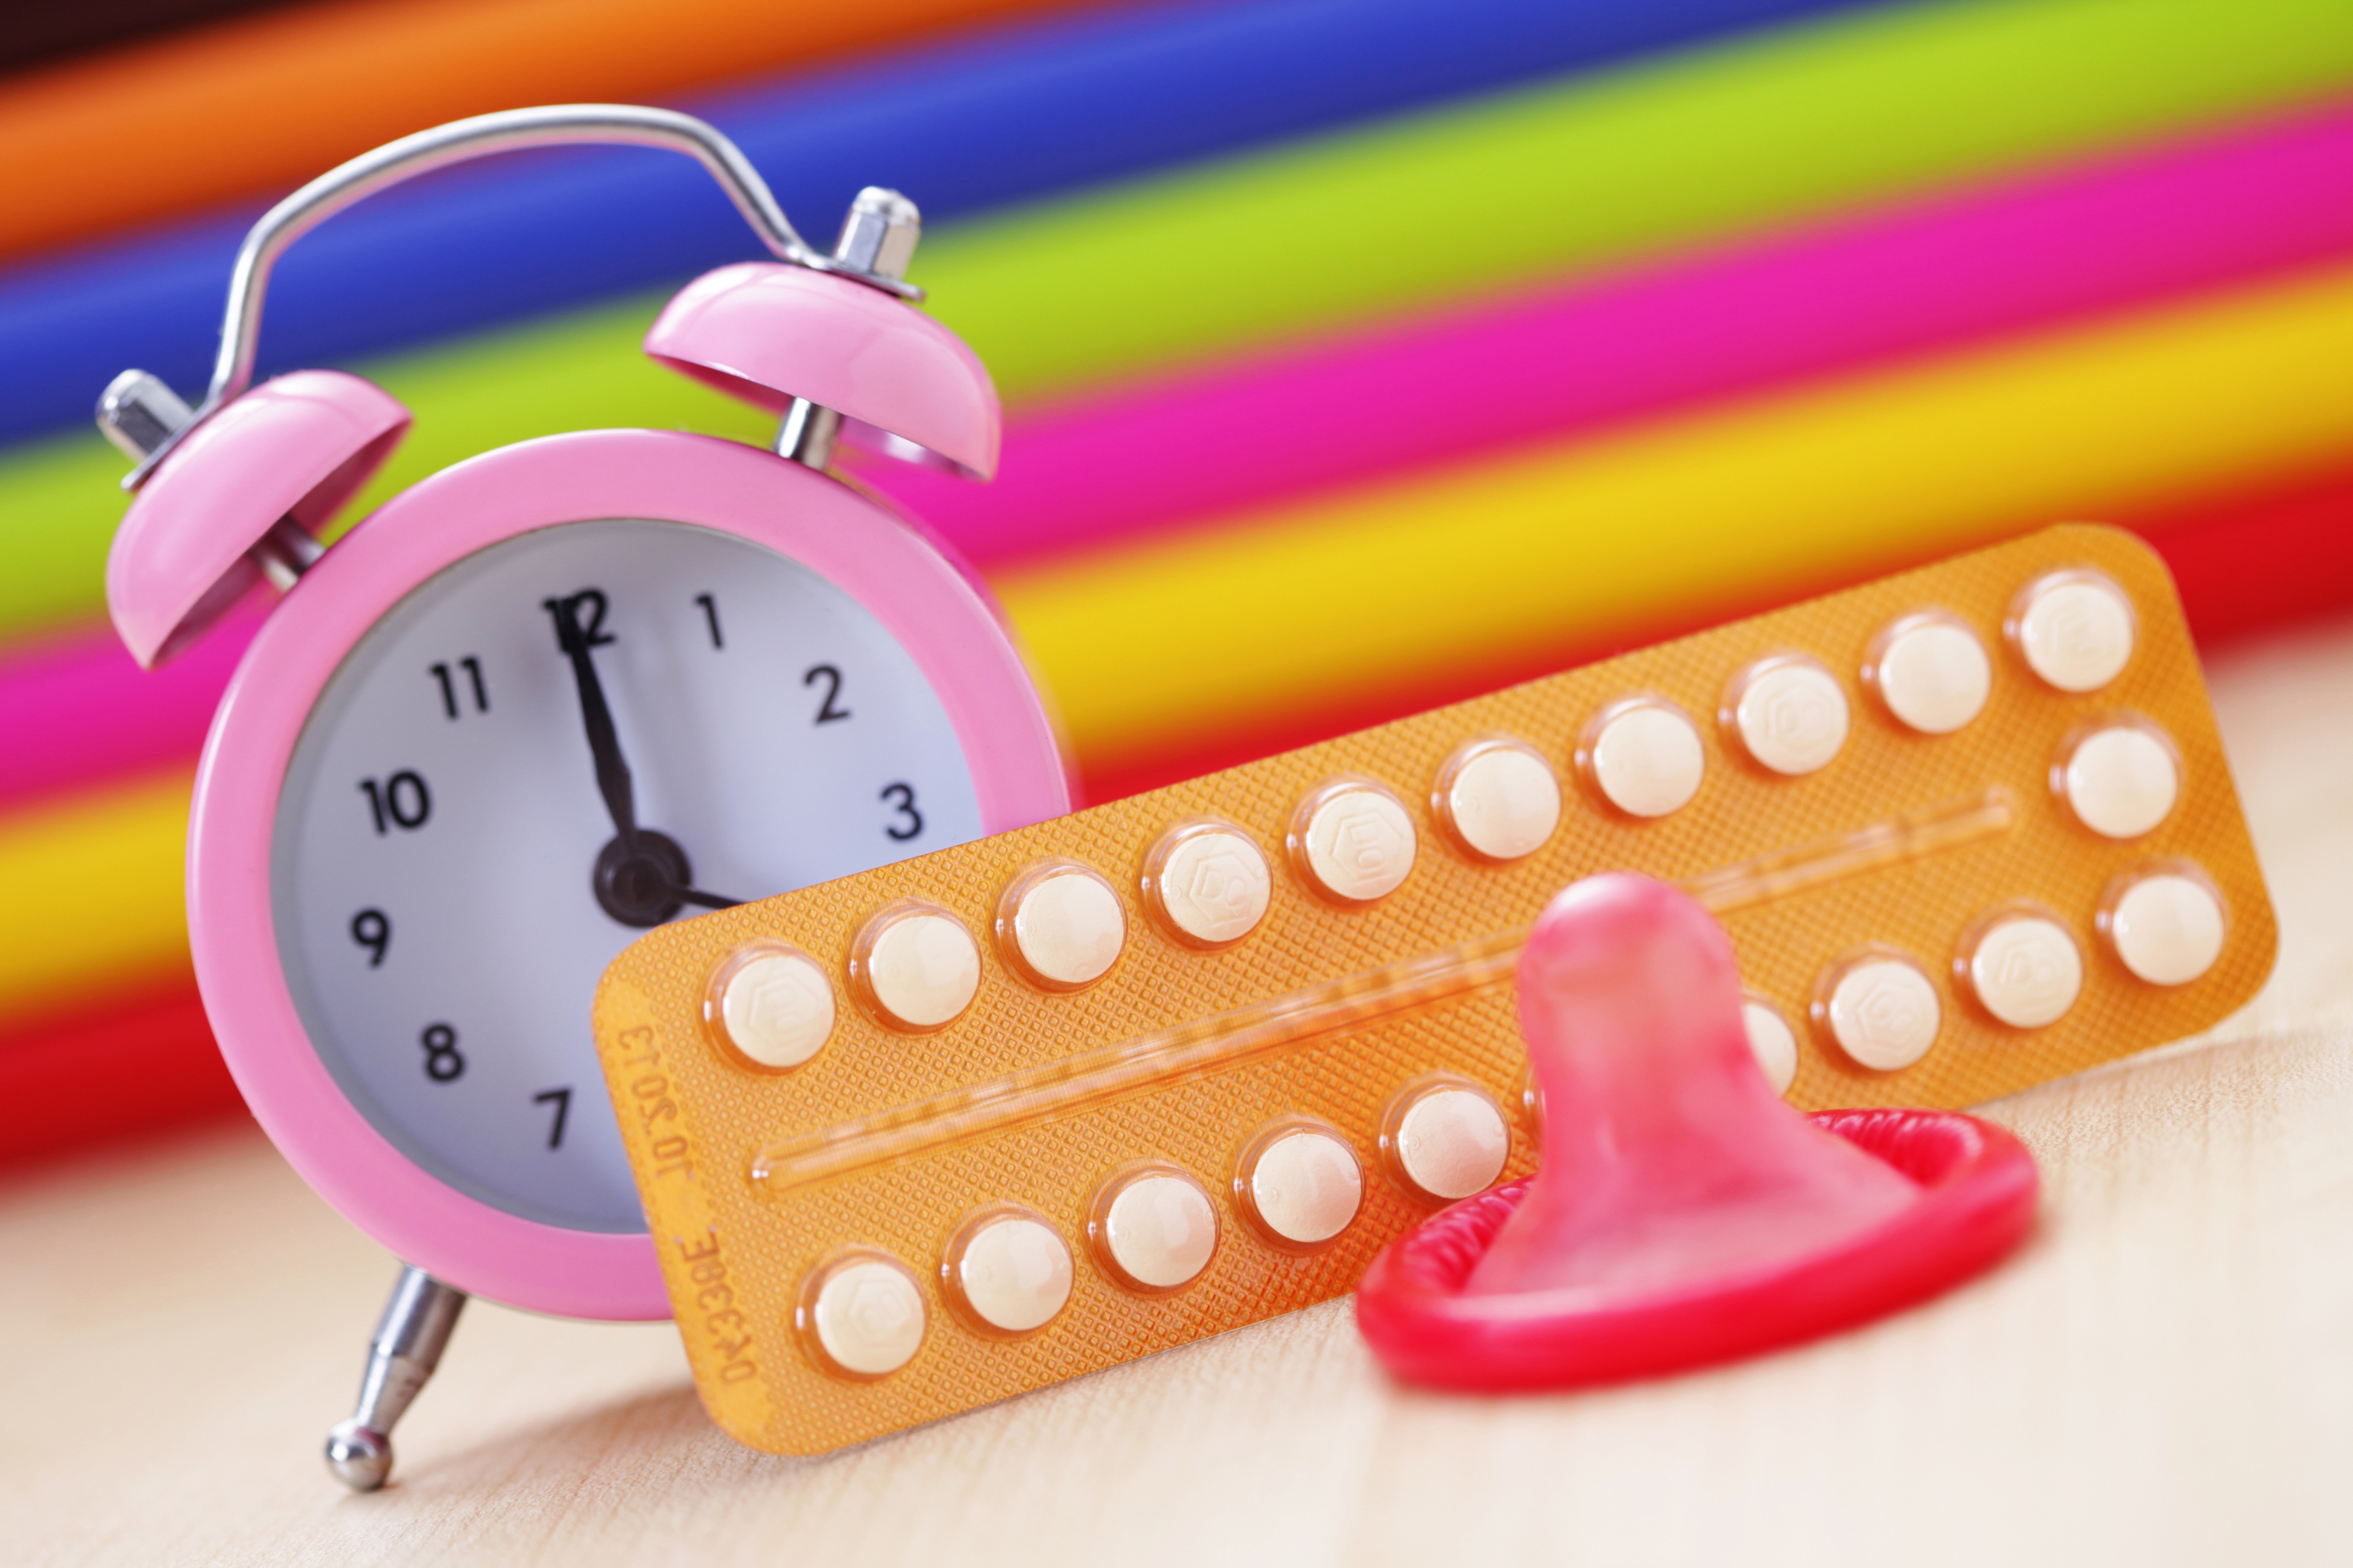 contraceptive orale i varicoza schema de punere a lipitorilor în varicoza